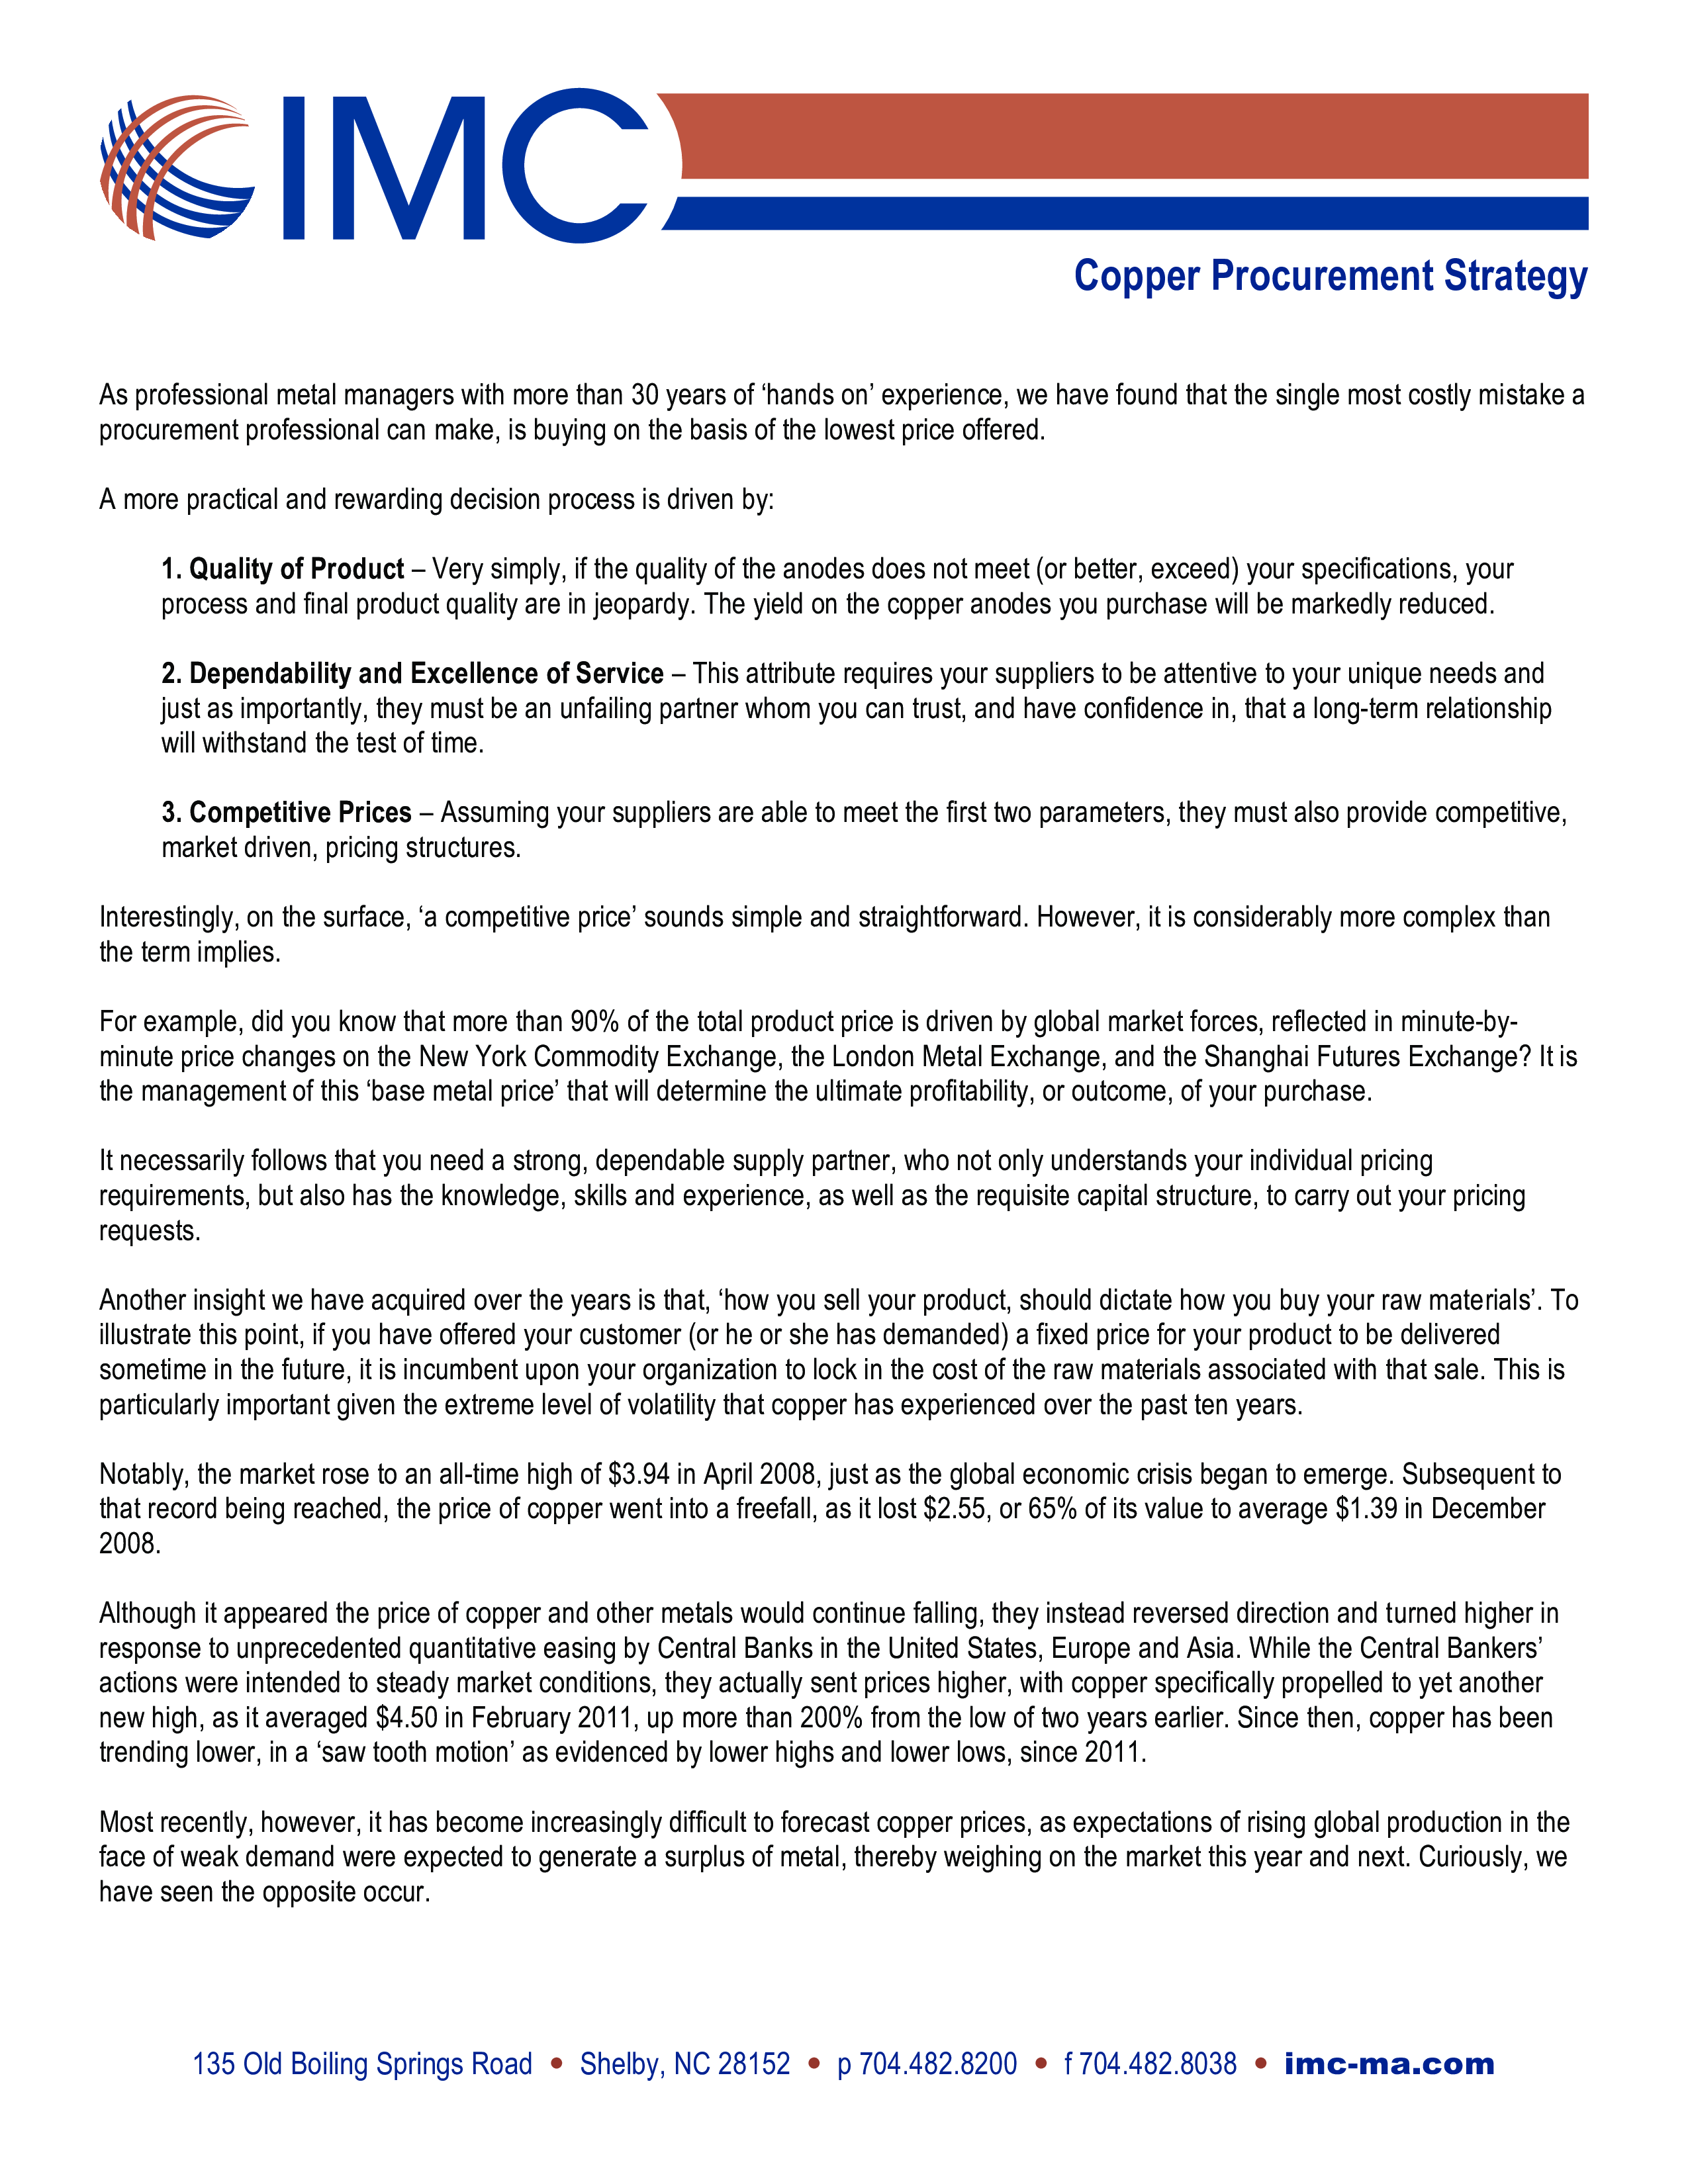 Copper Procurement Strategy main image